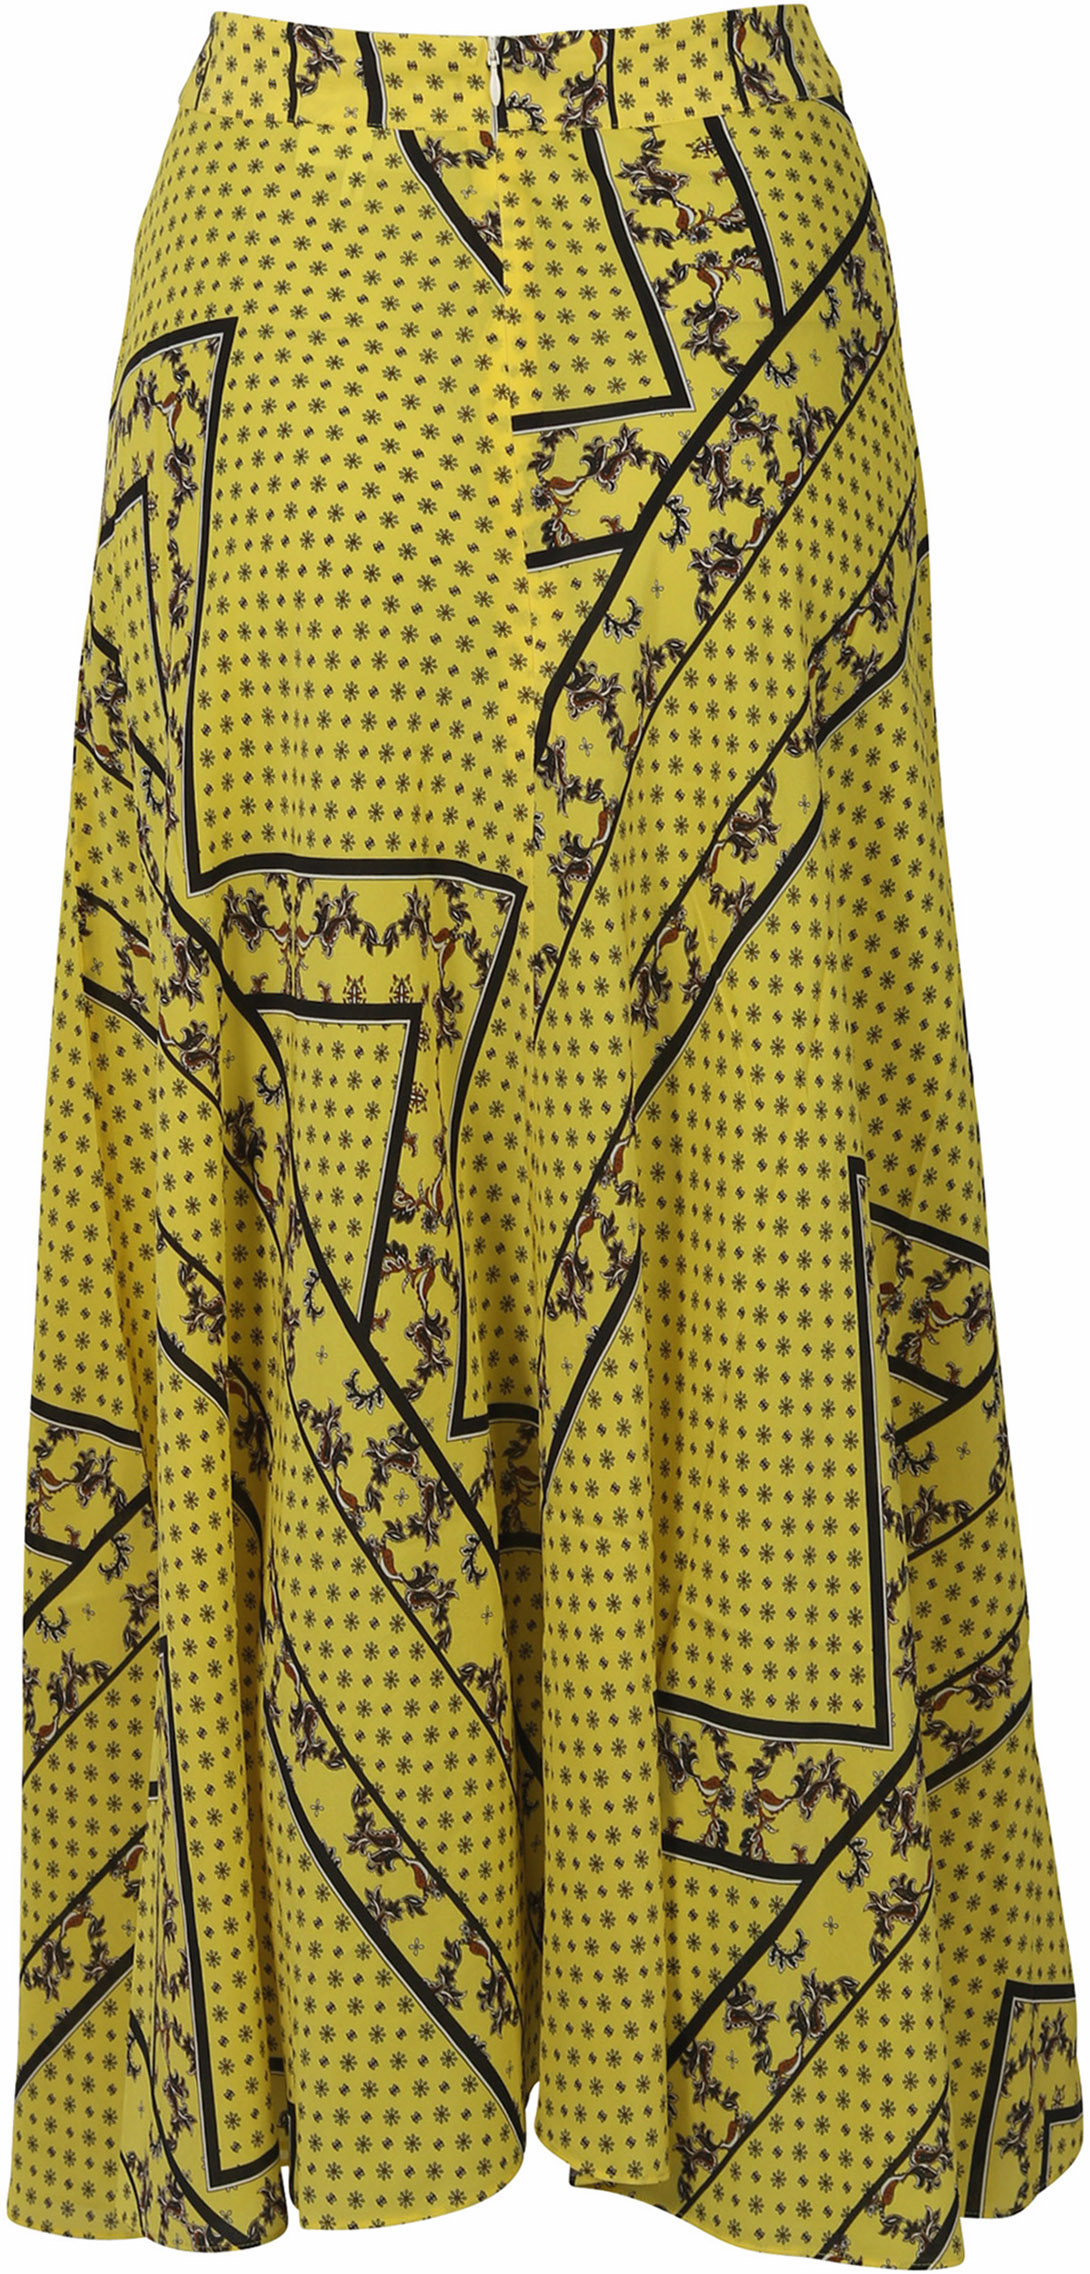 Ganni Skirt Yellow Printed